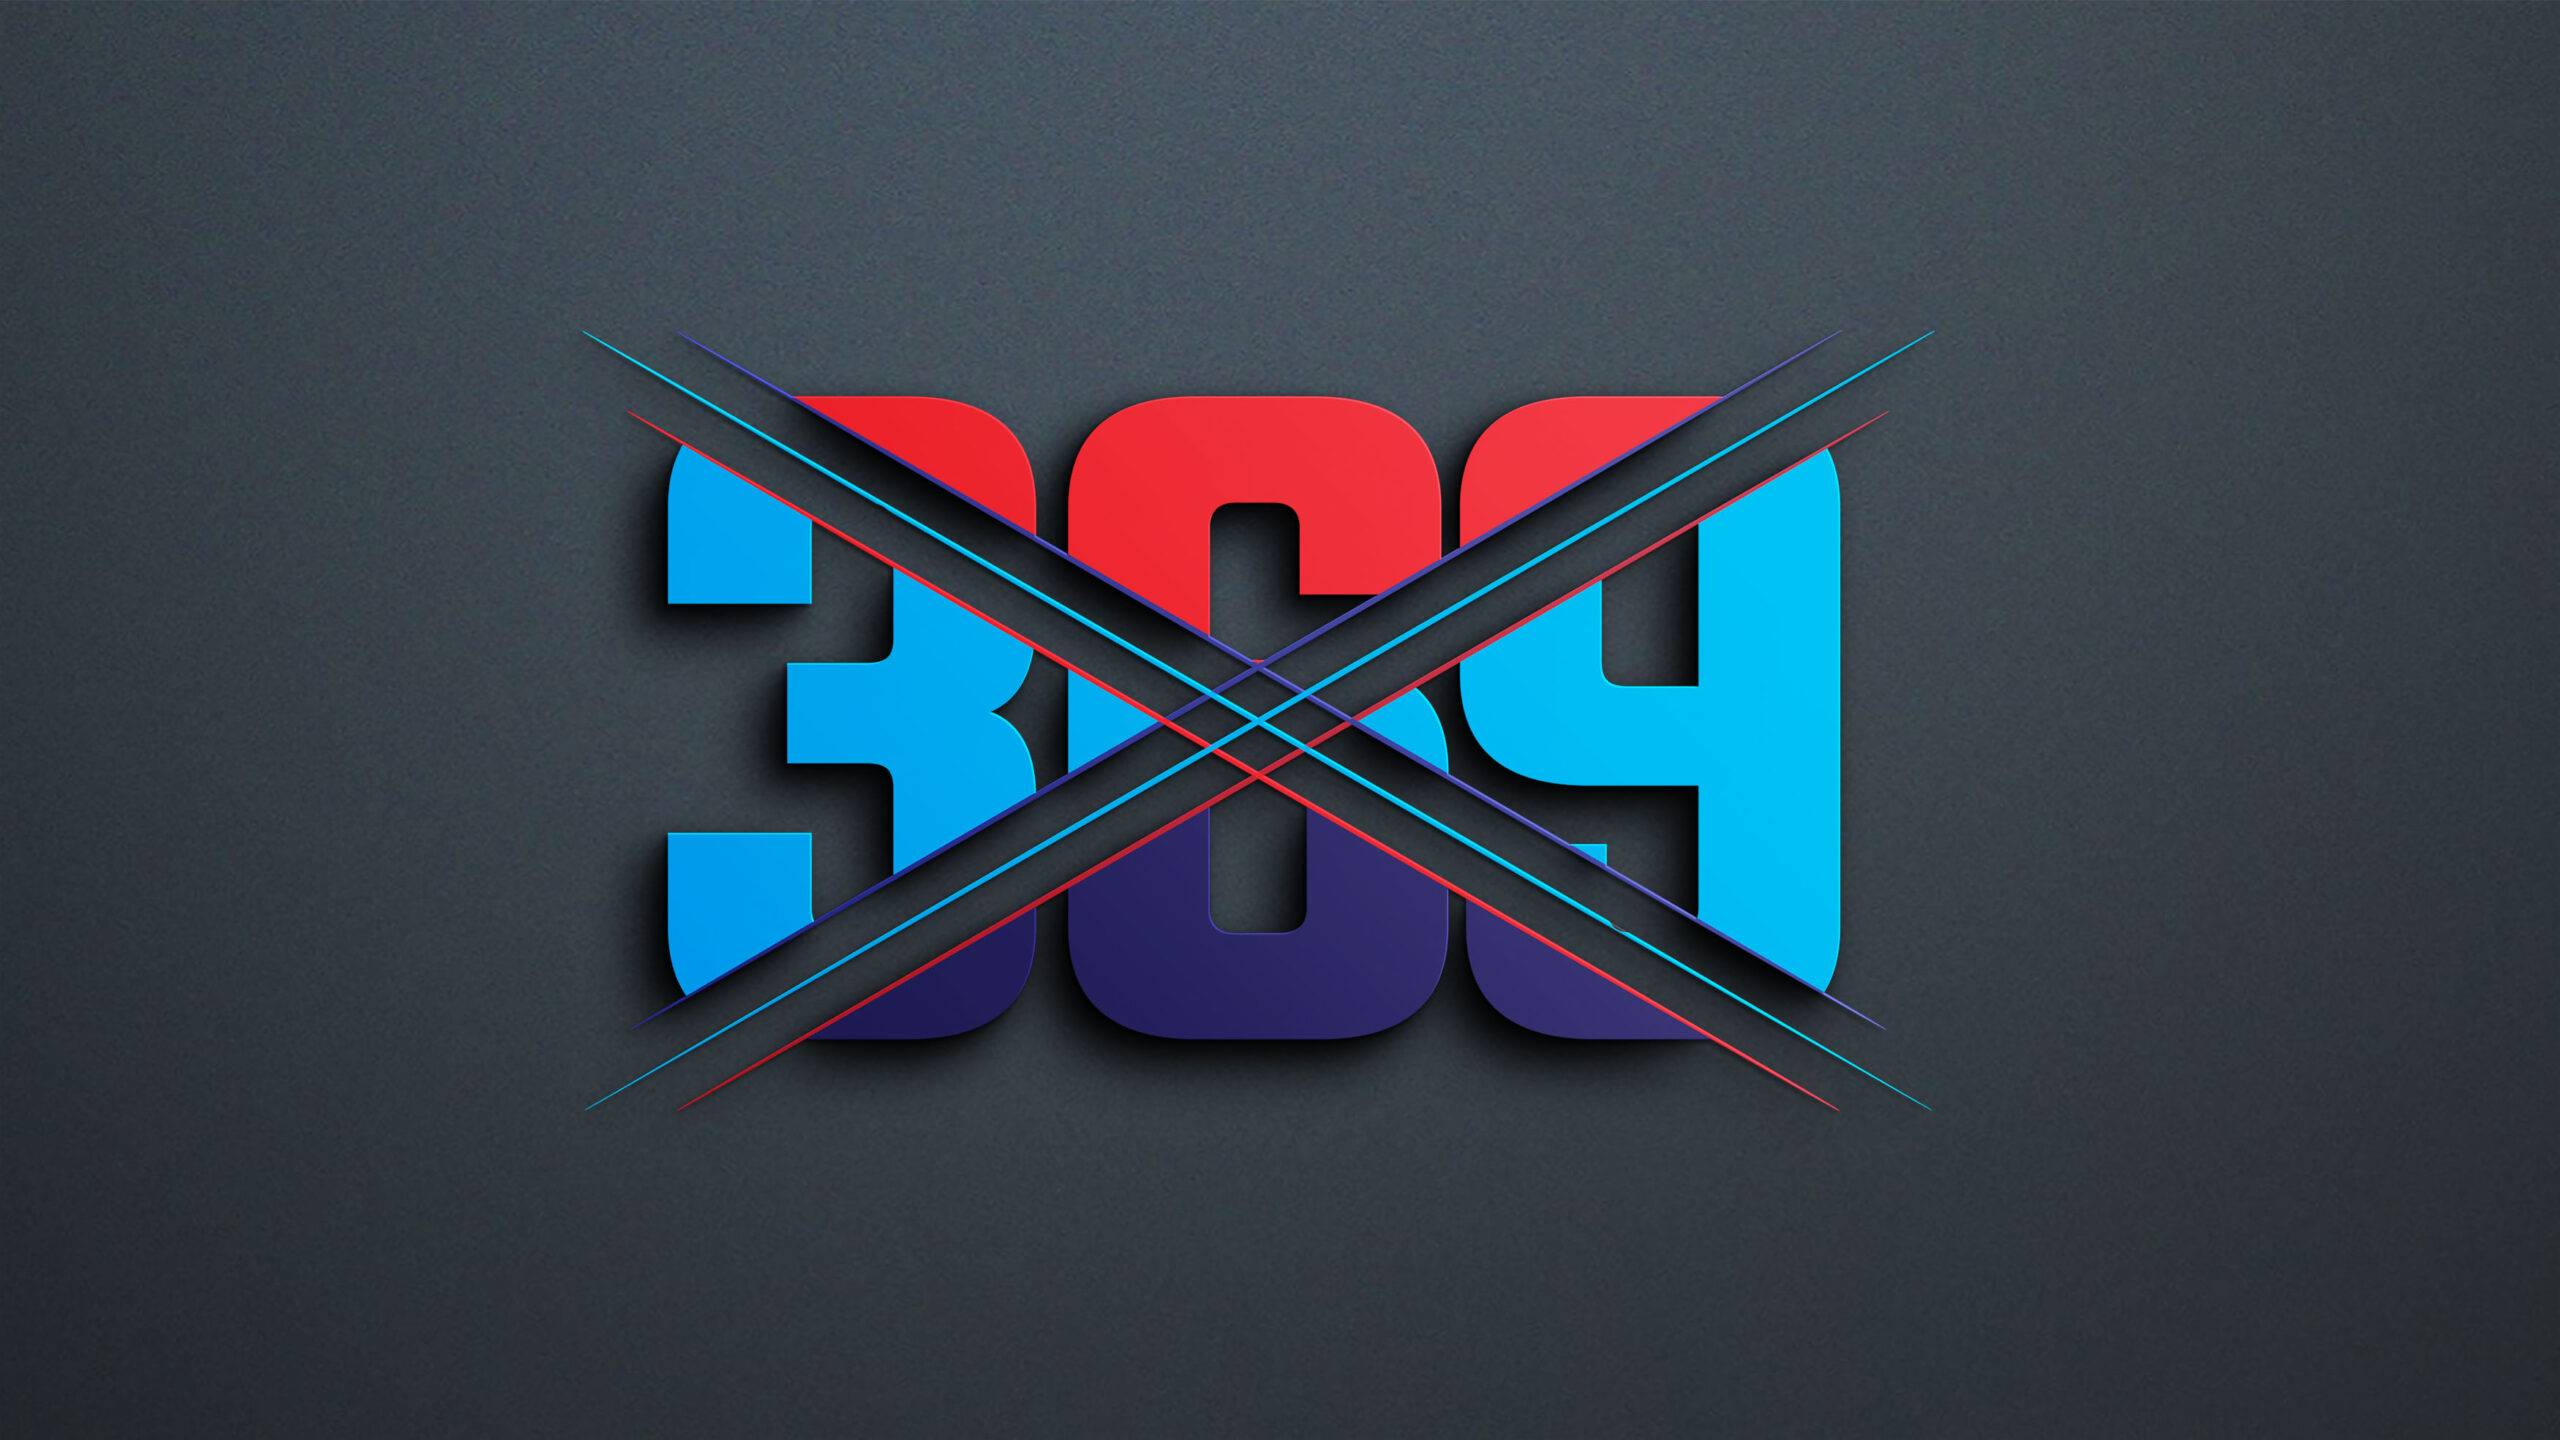 369 logo | Pikvector